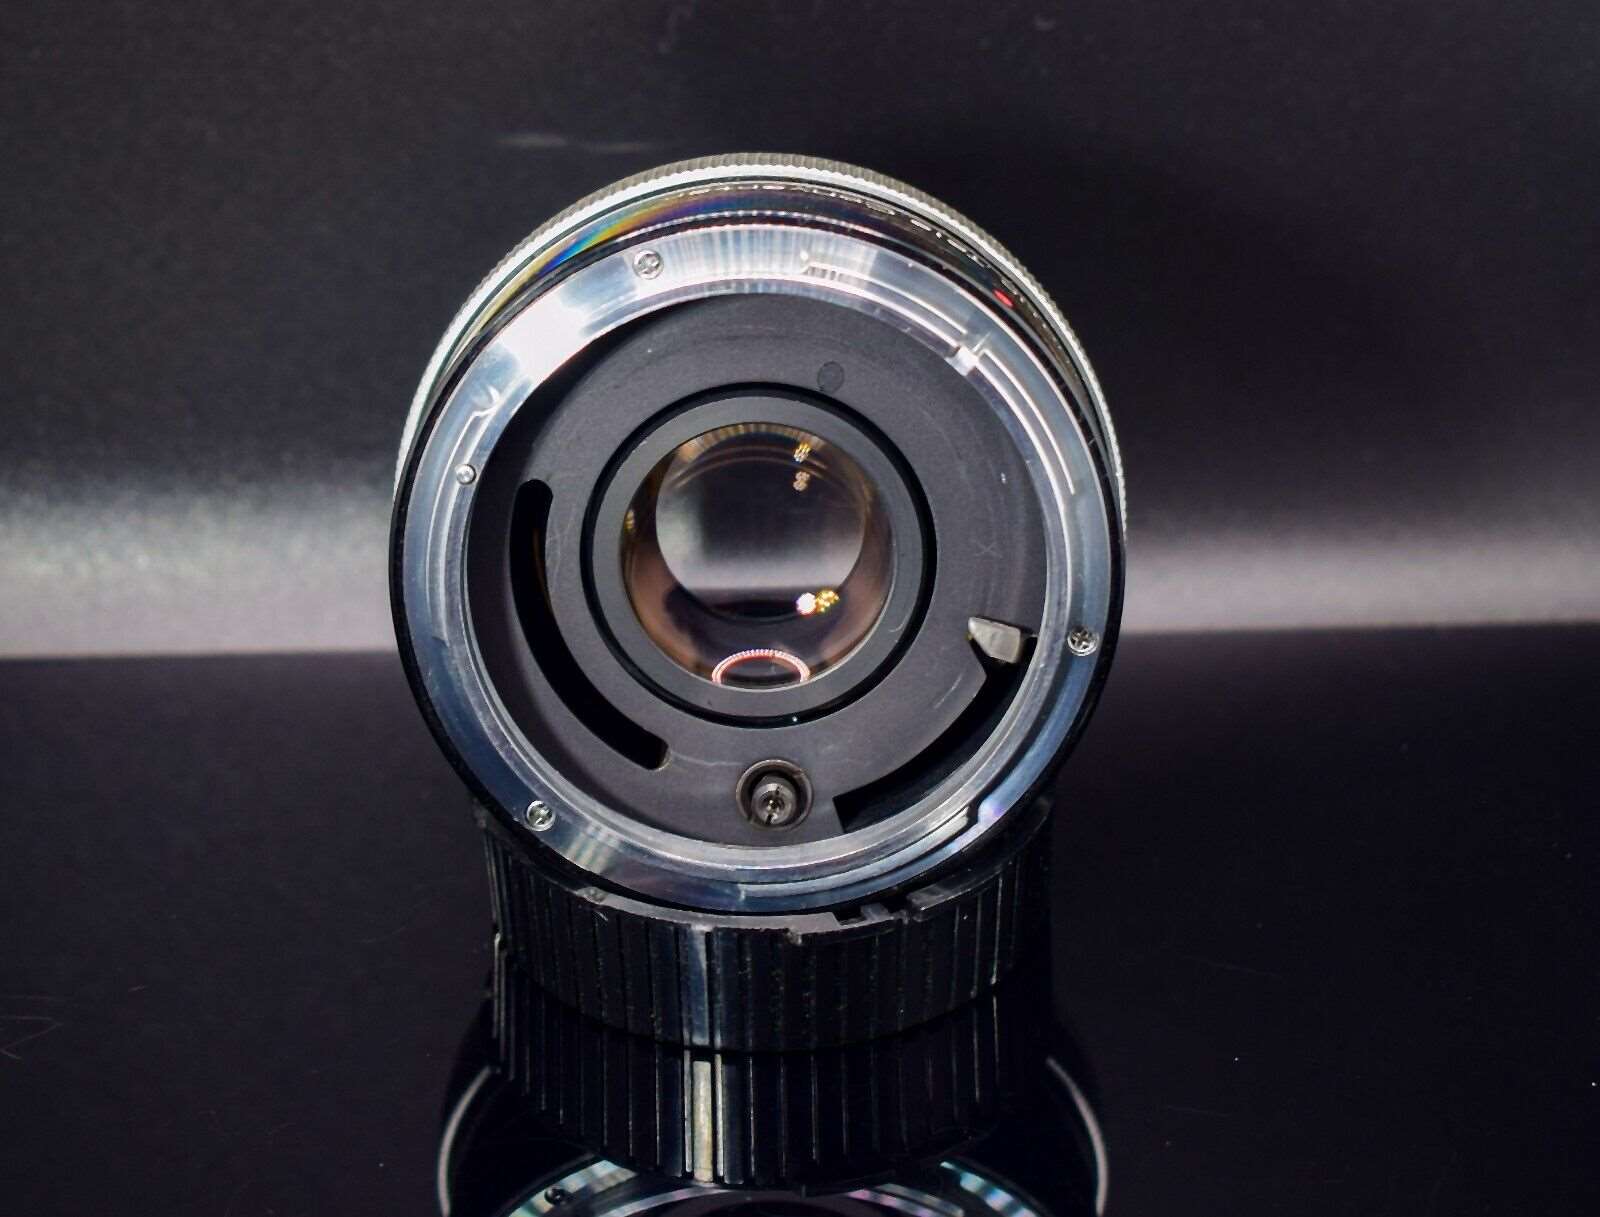 Vivitar Automatic Tele Converter 2X-4 Black FL FD Canon Mount cw Protective Caps